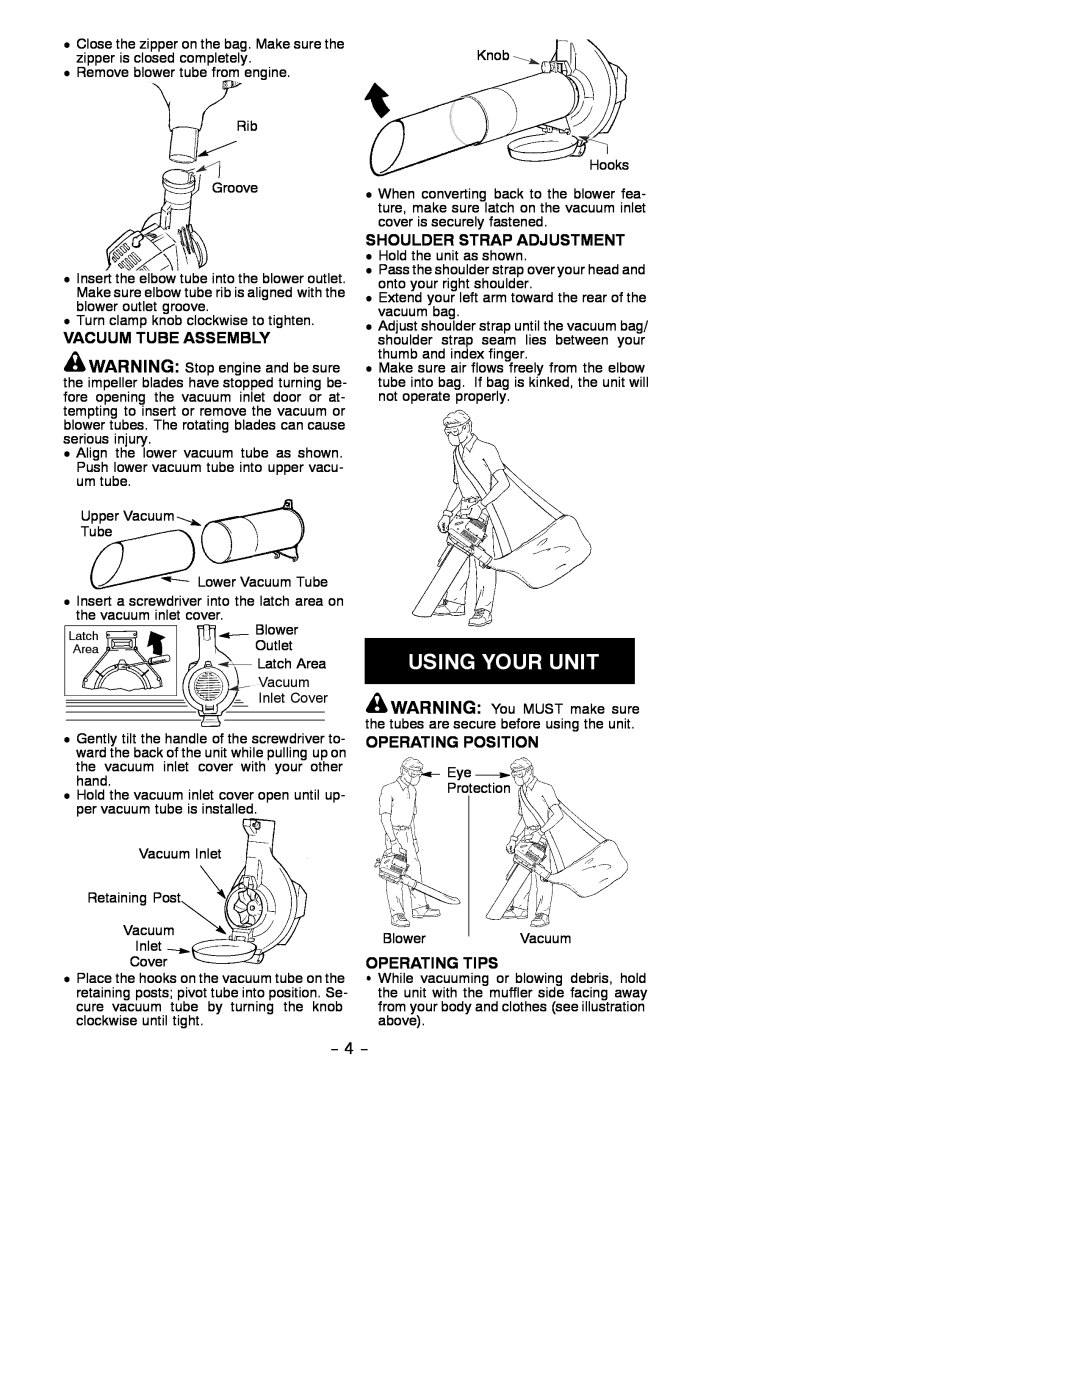 Poulan 530086795 instruction manual Vacuum Tube Assembly, Shoulder Strap Adjustment, Operating Position, Operating Tips 